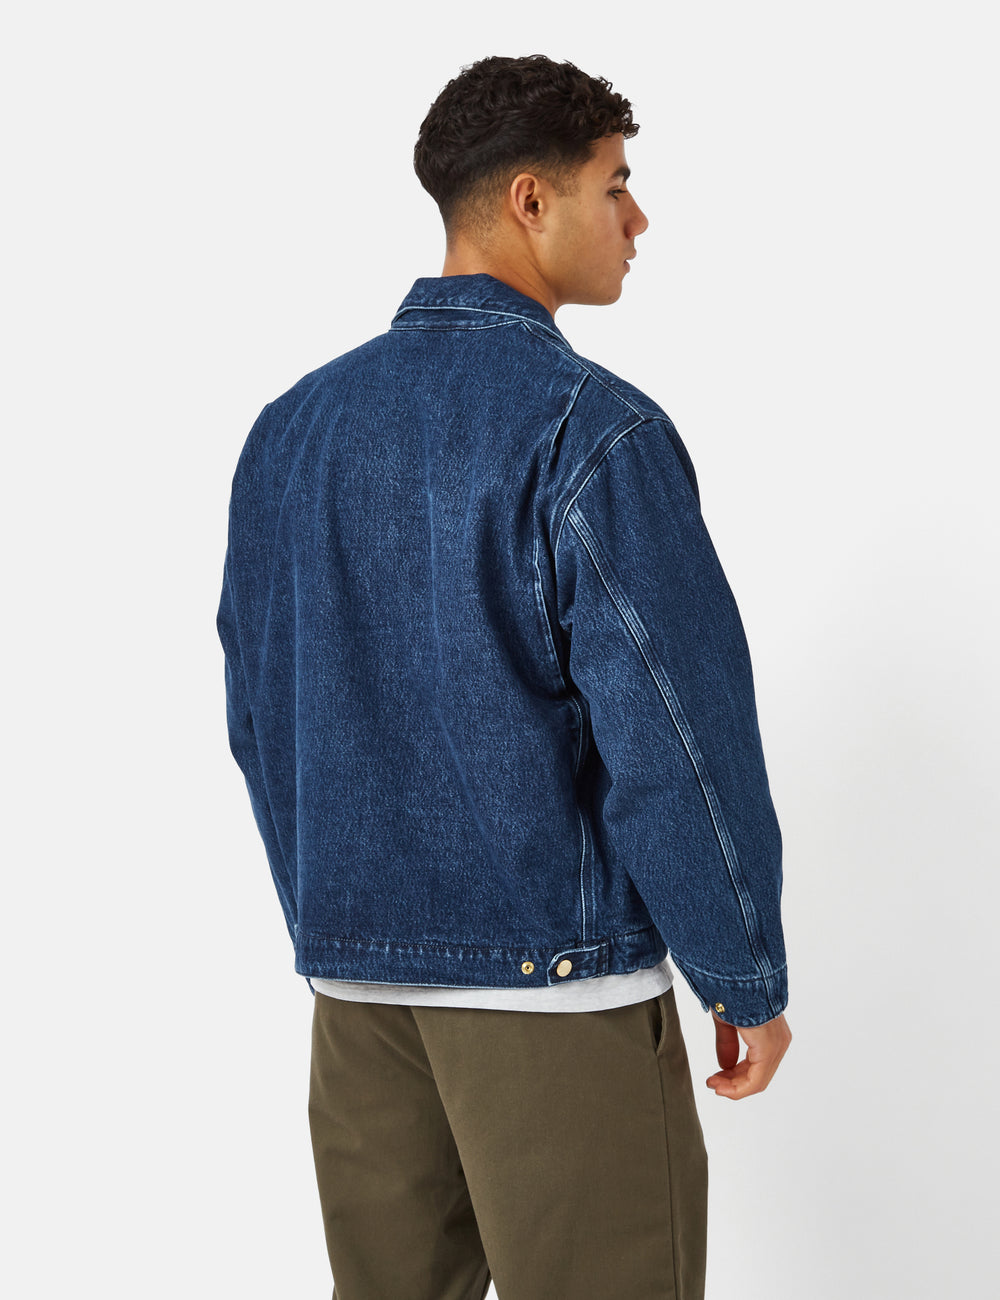 Carhartt-WIP Rider Jacket (Denim) - Blue Stone Washed